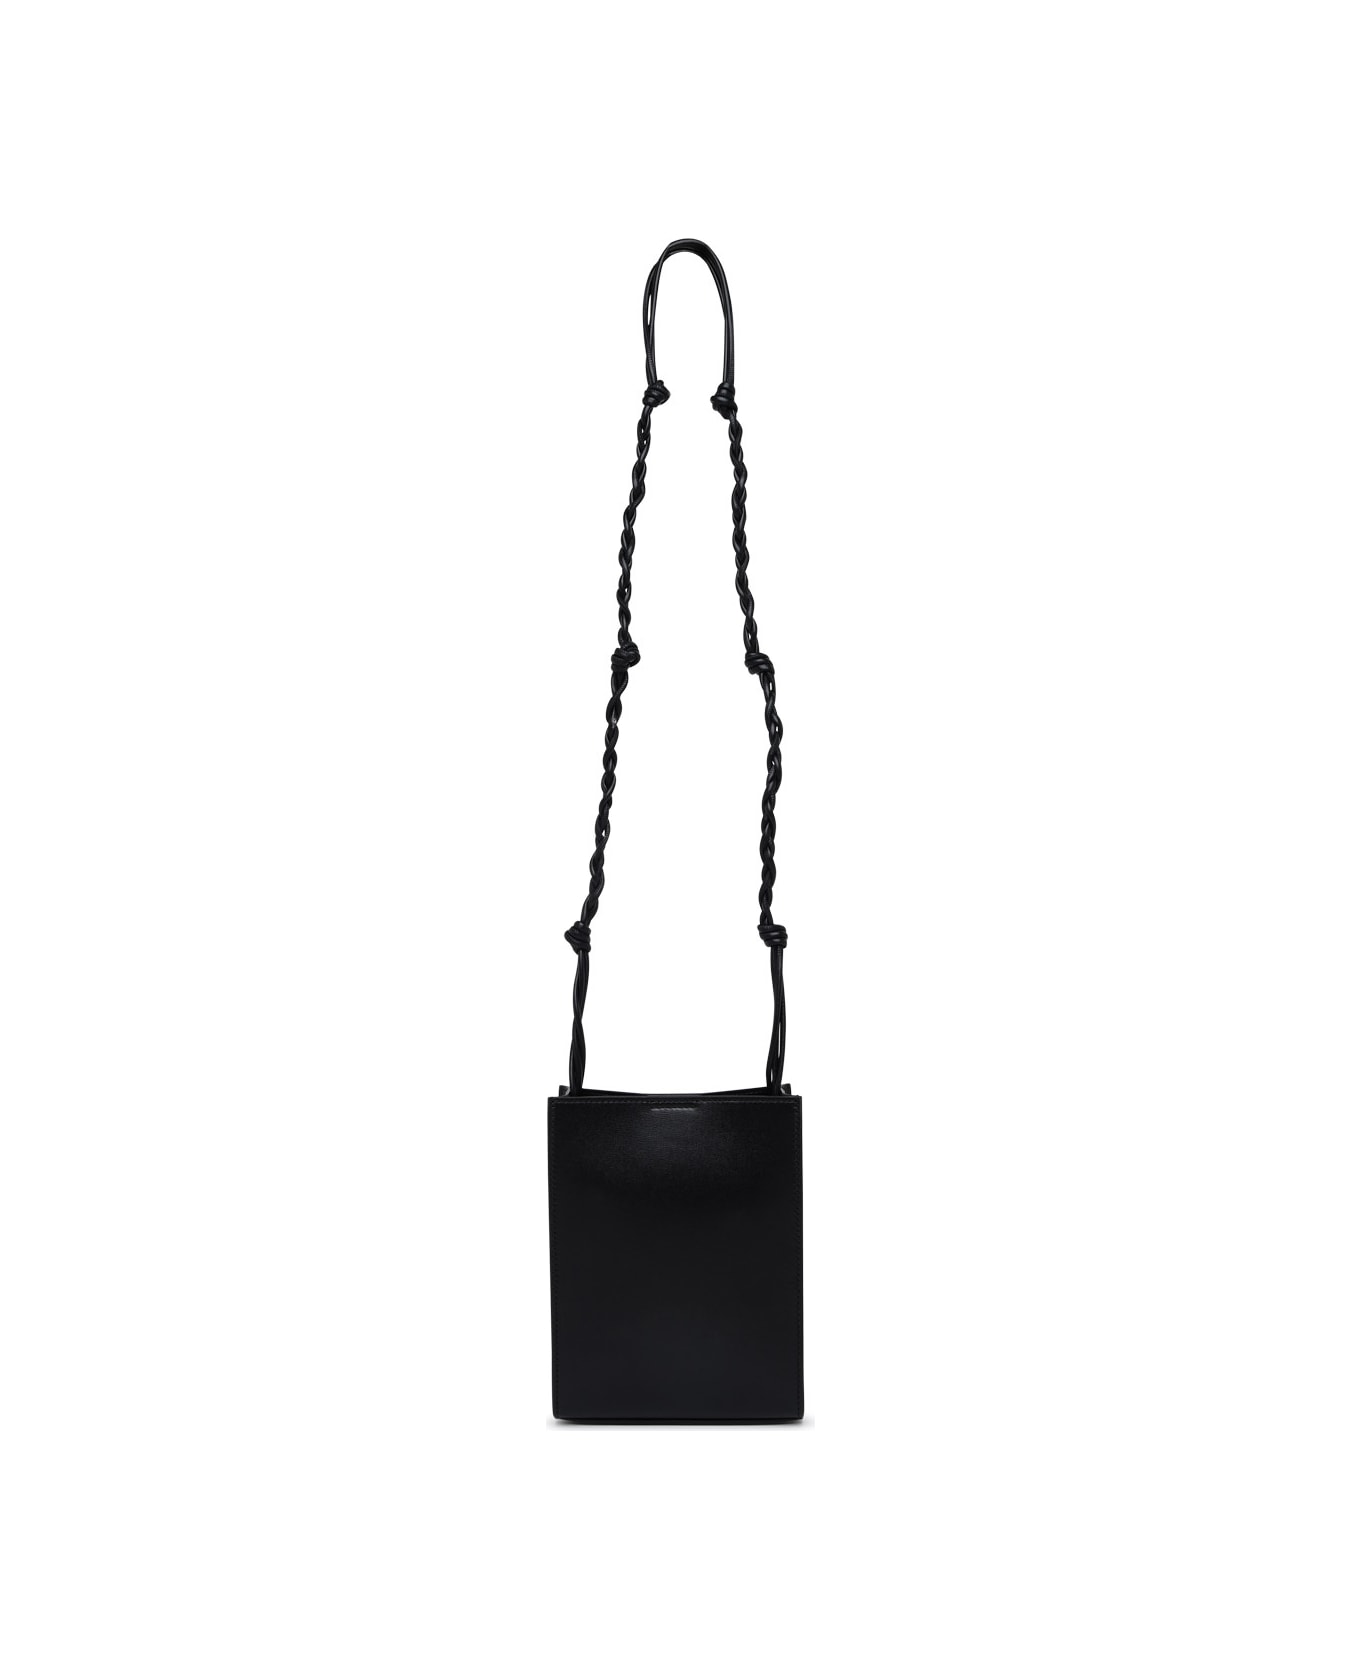 Jil Sander Black Leather Small Tangle Crossbody Bag - Black